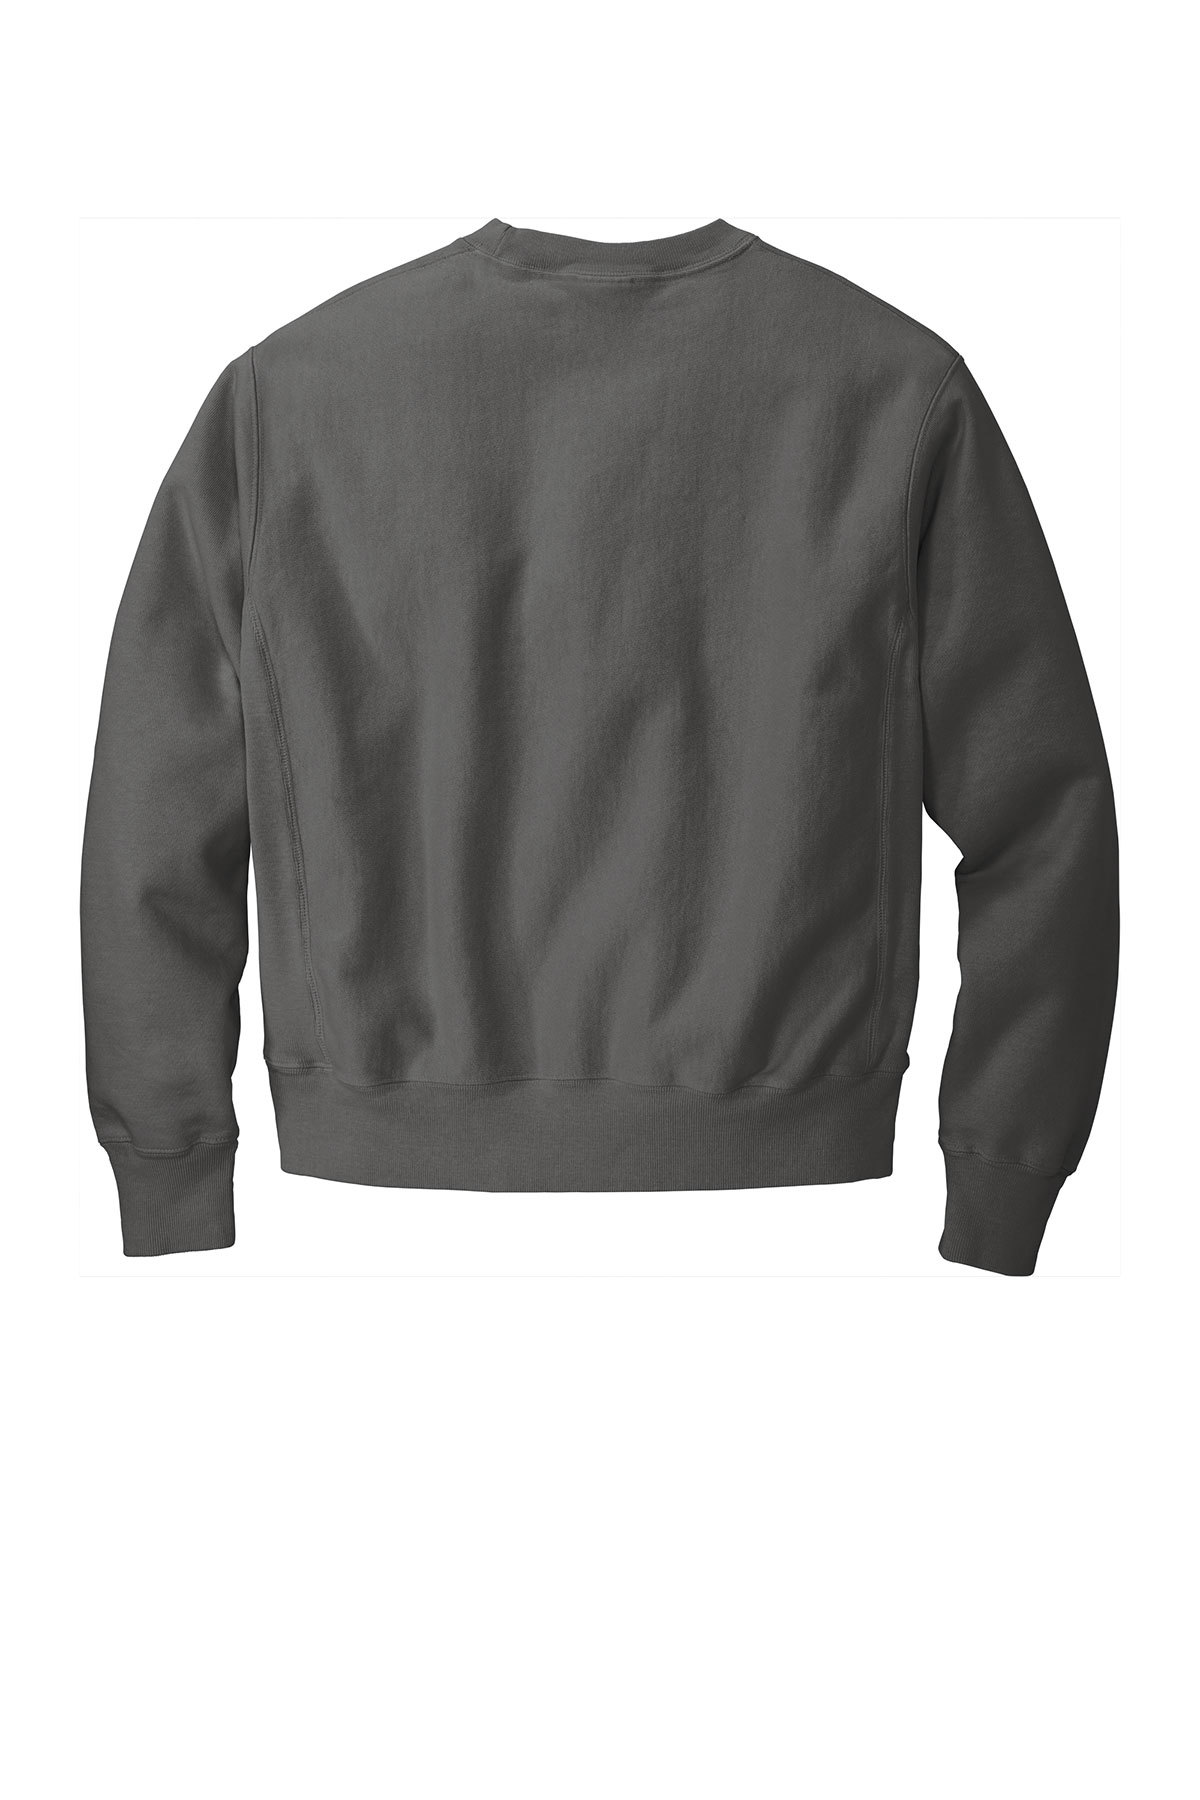 Champion Reverse Weave Garment-Dyed Crewneck Sweatshirt, Product